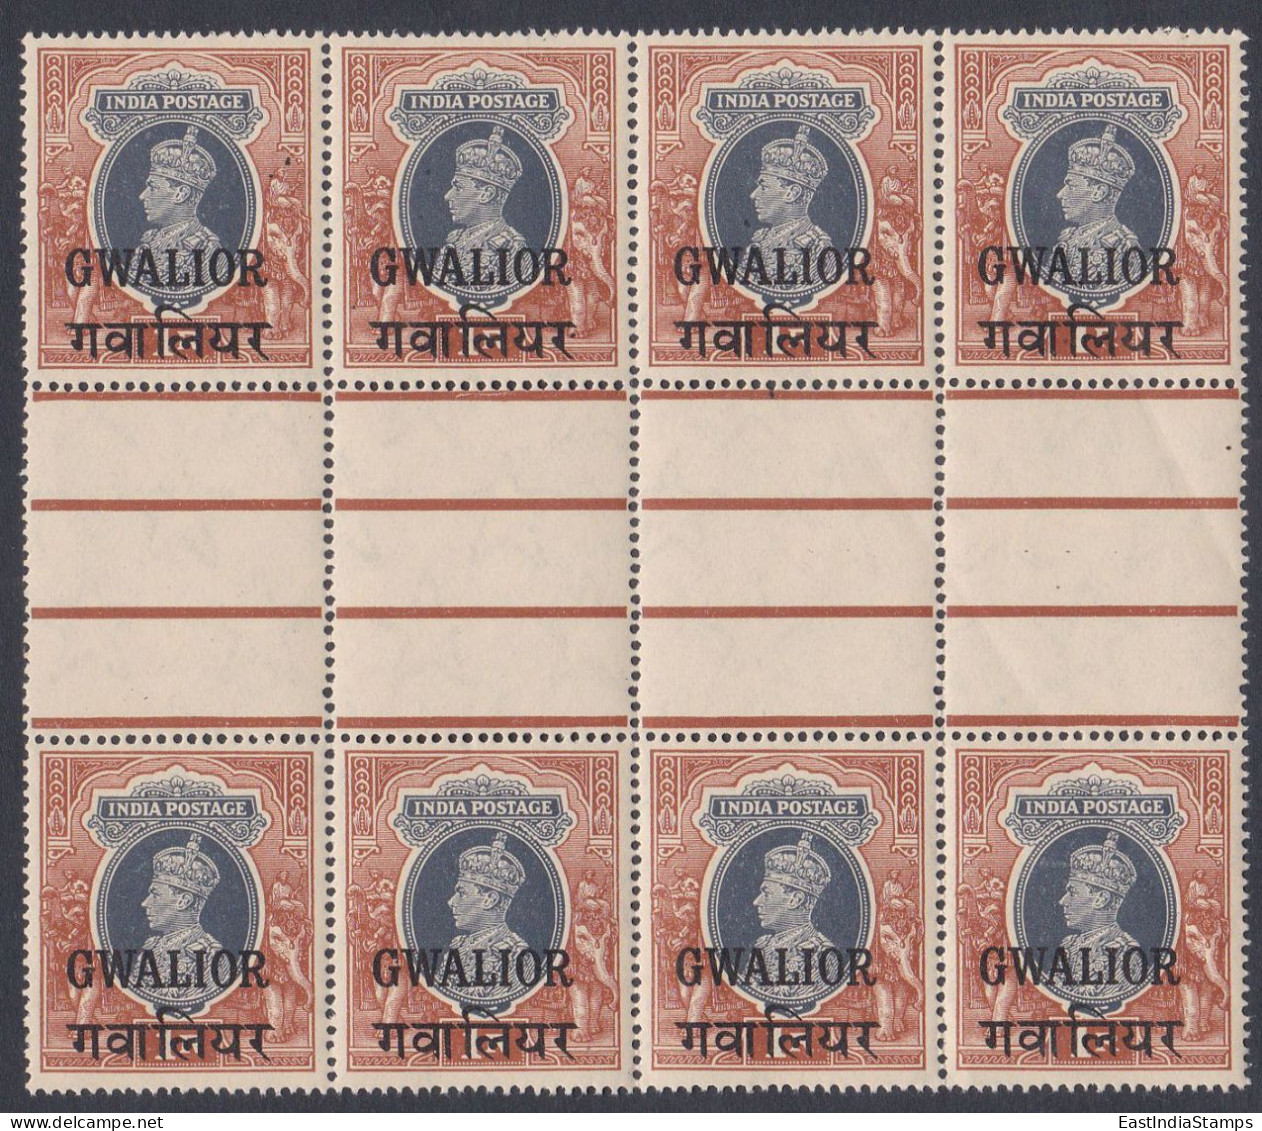 Inde British India Gwalior State 1942? MNH King George VI, One Rupee, Gutter Block - Gwalior